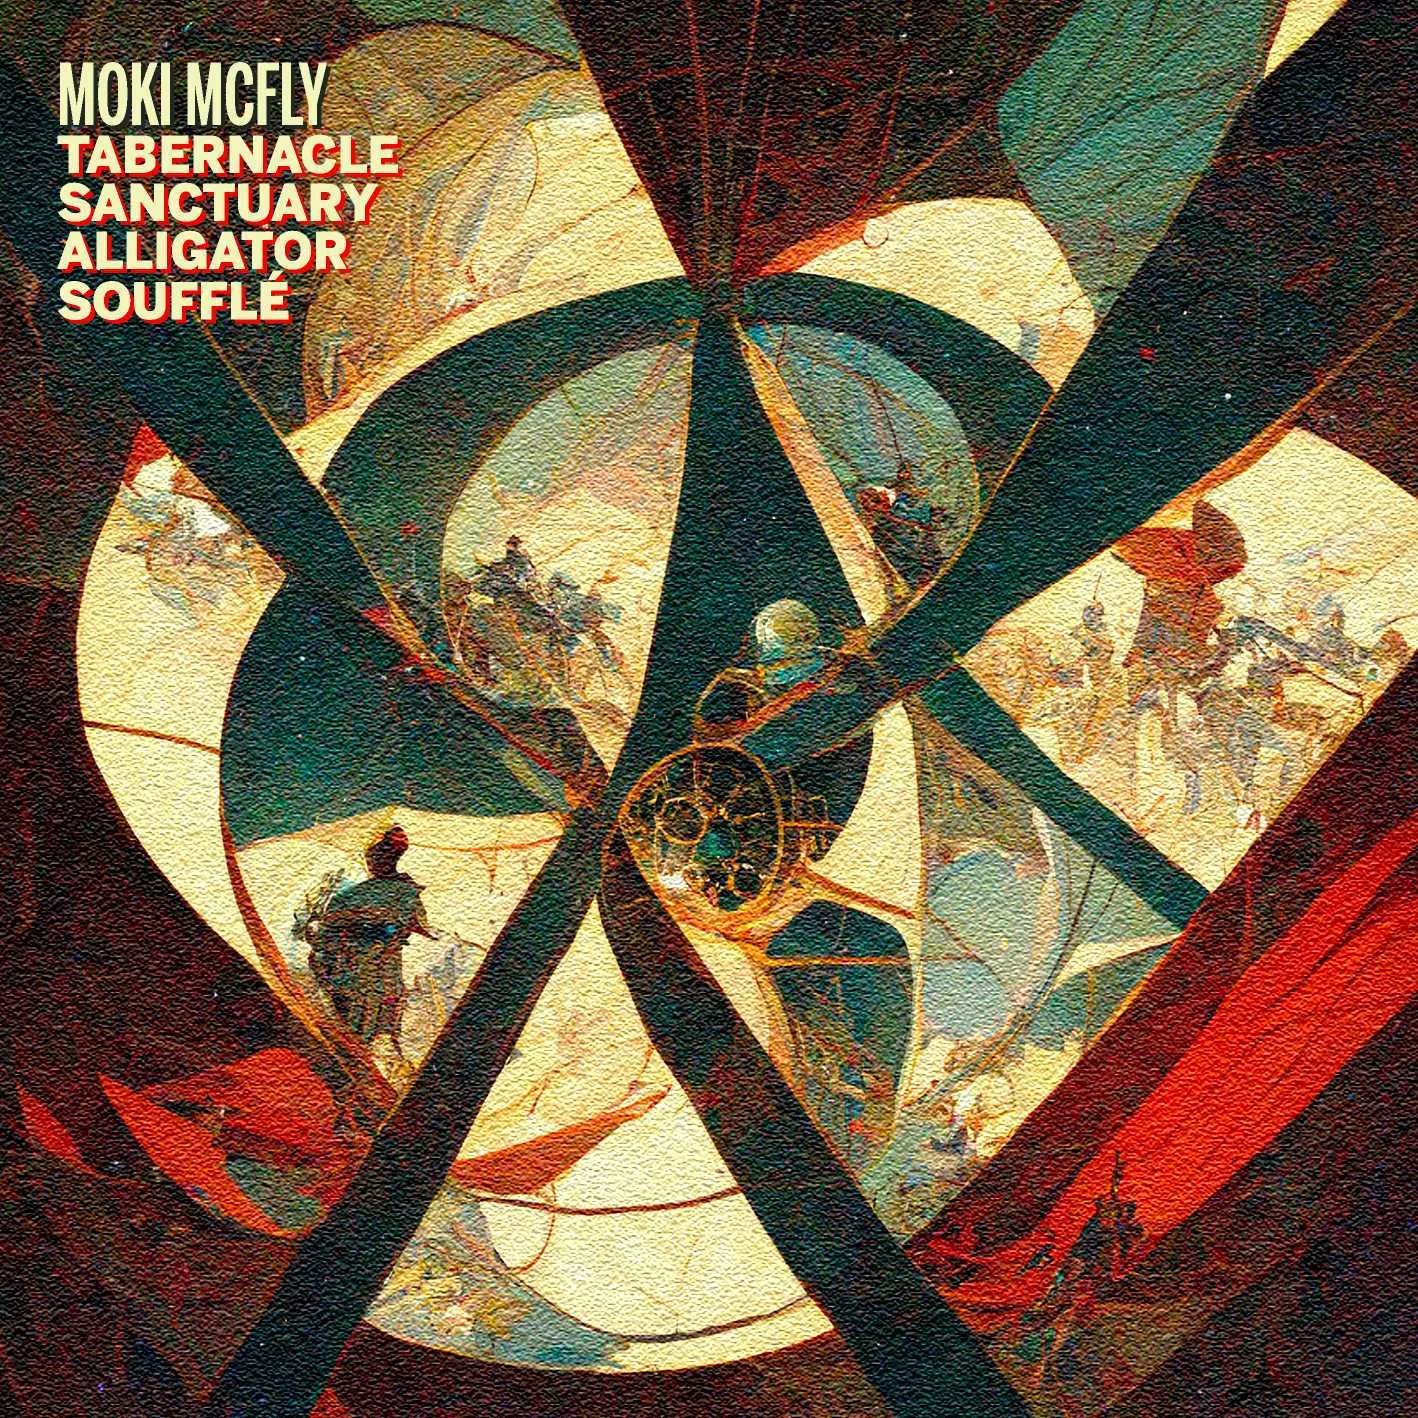 Album cover for “Tabernacle Sanctuary Alligator Soufflé” by Moki Mcfly